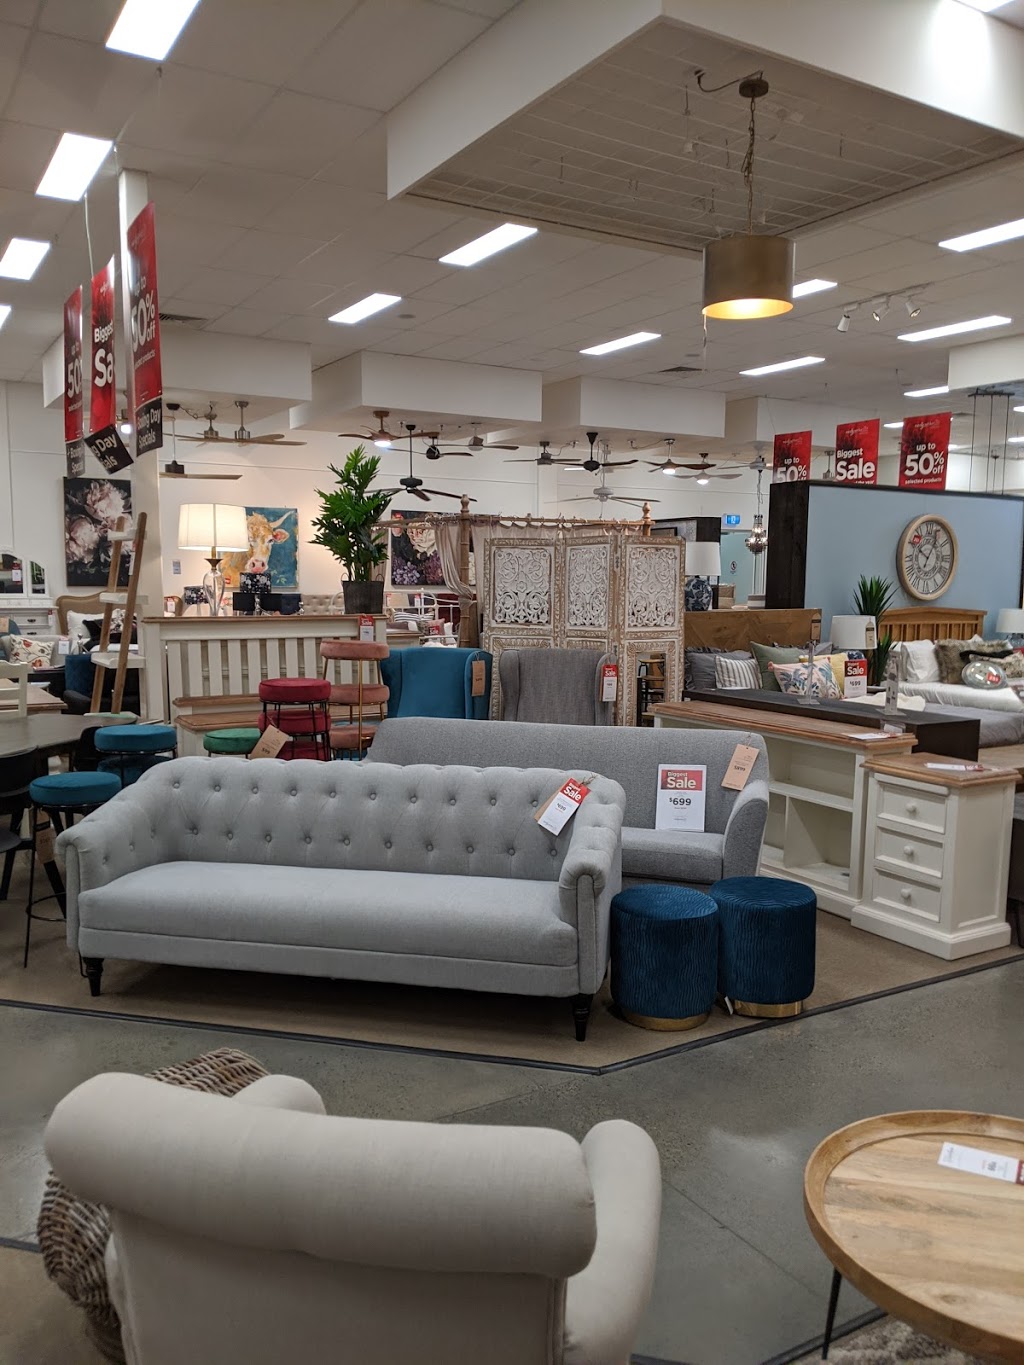 Early Settler Newcastle | furniture store | 14/150 Park Ave, Kotara NSW 2289, Australia | 0249521894 OR +61 2 4952 1894